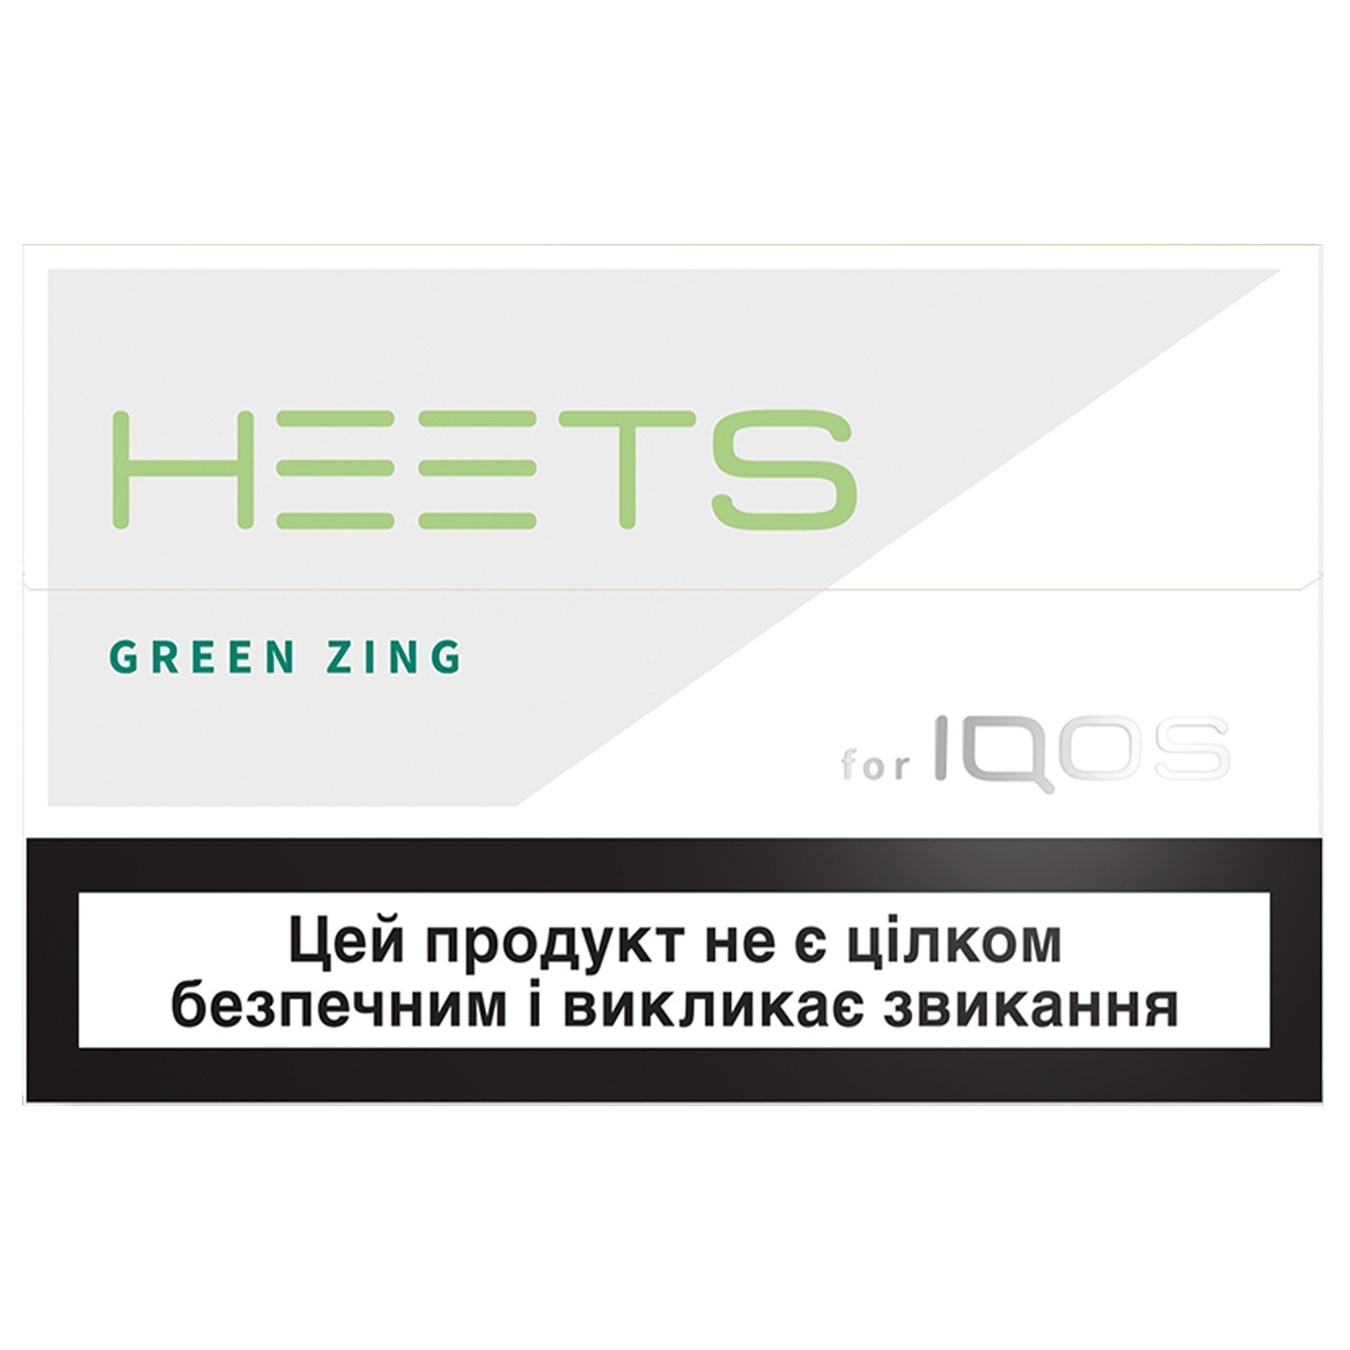 Стіки Heets Green Zing 20шт (ціна вказана без акцизу)